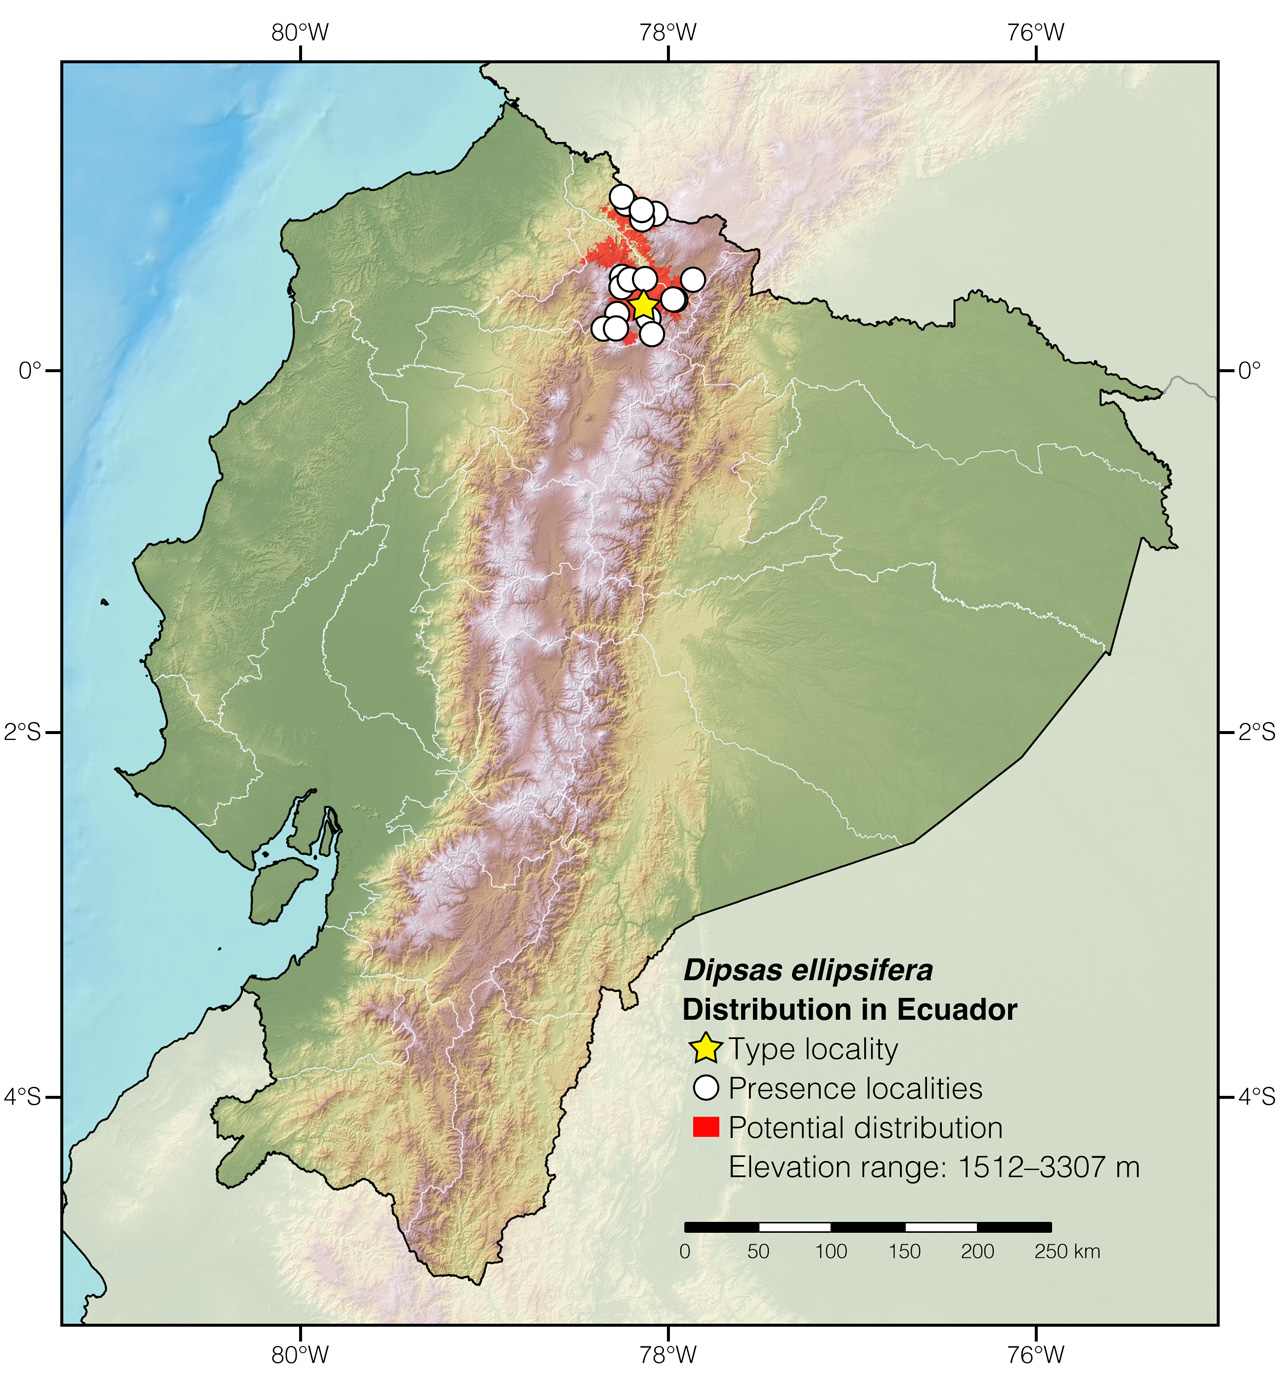 Distribution of Dipsas ellipsifera in Ecuador